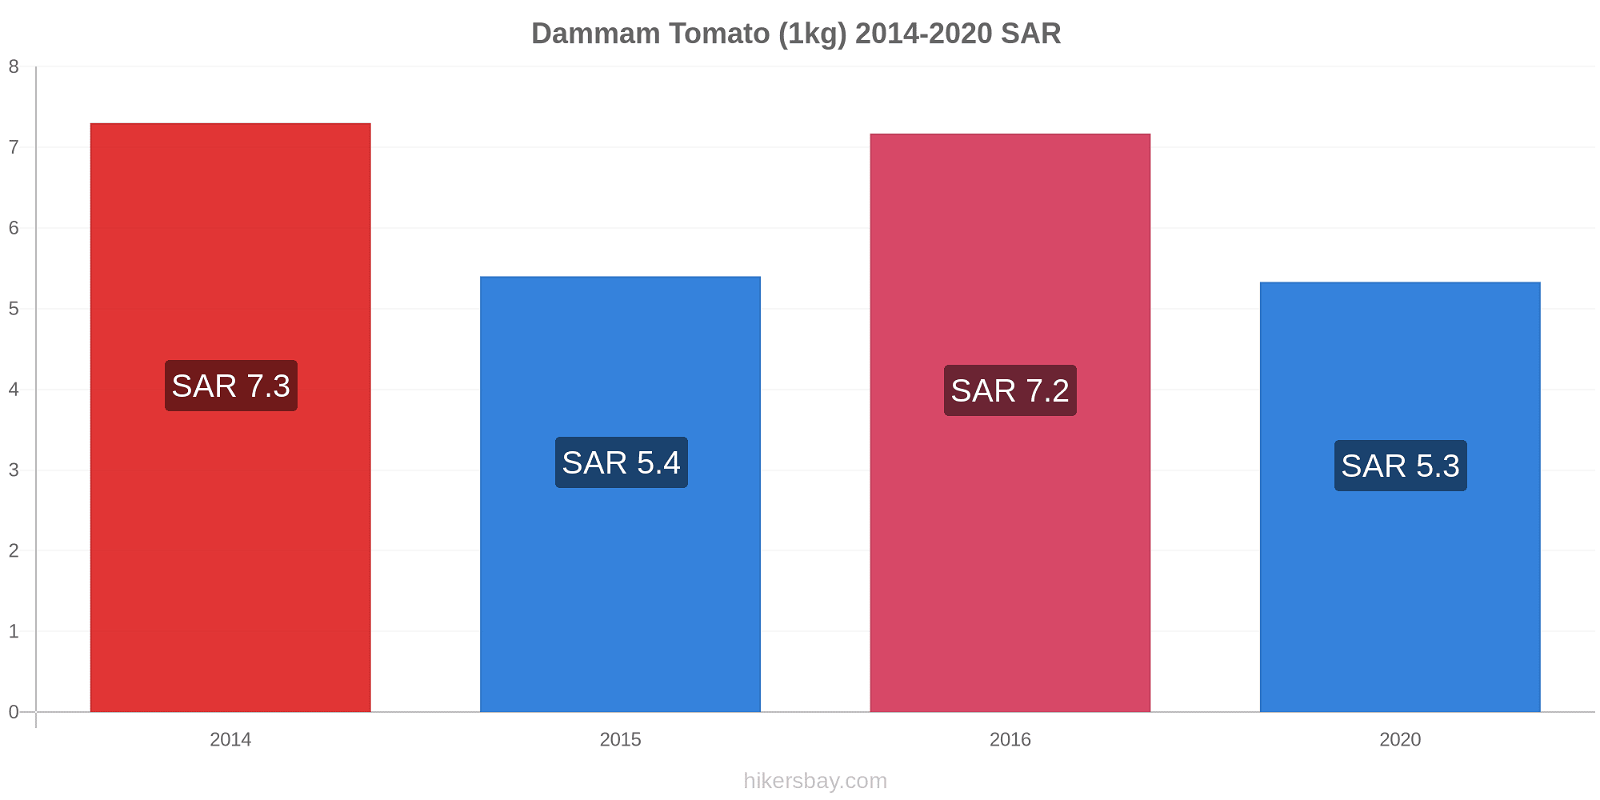 Dammam price changes Tomato (1kg) hikersbay.com